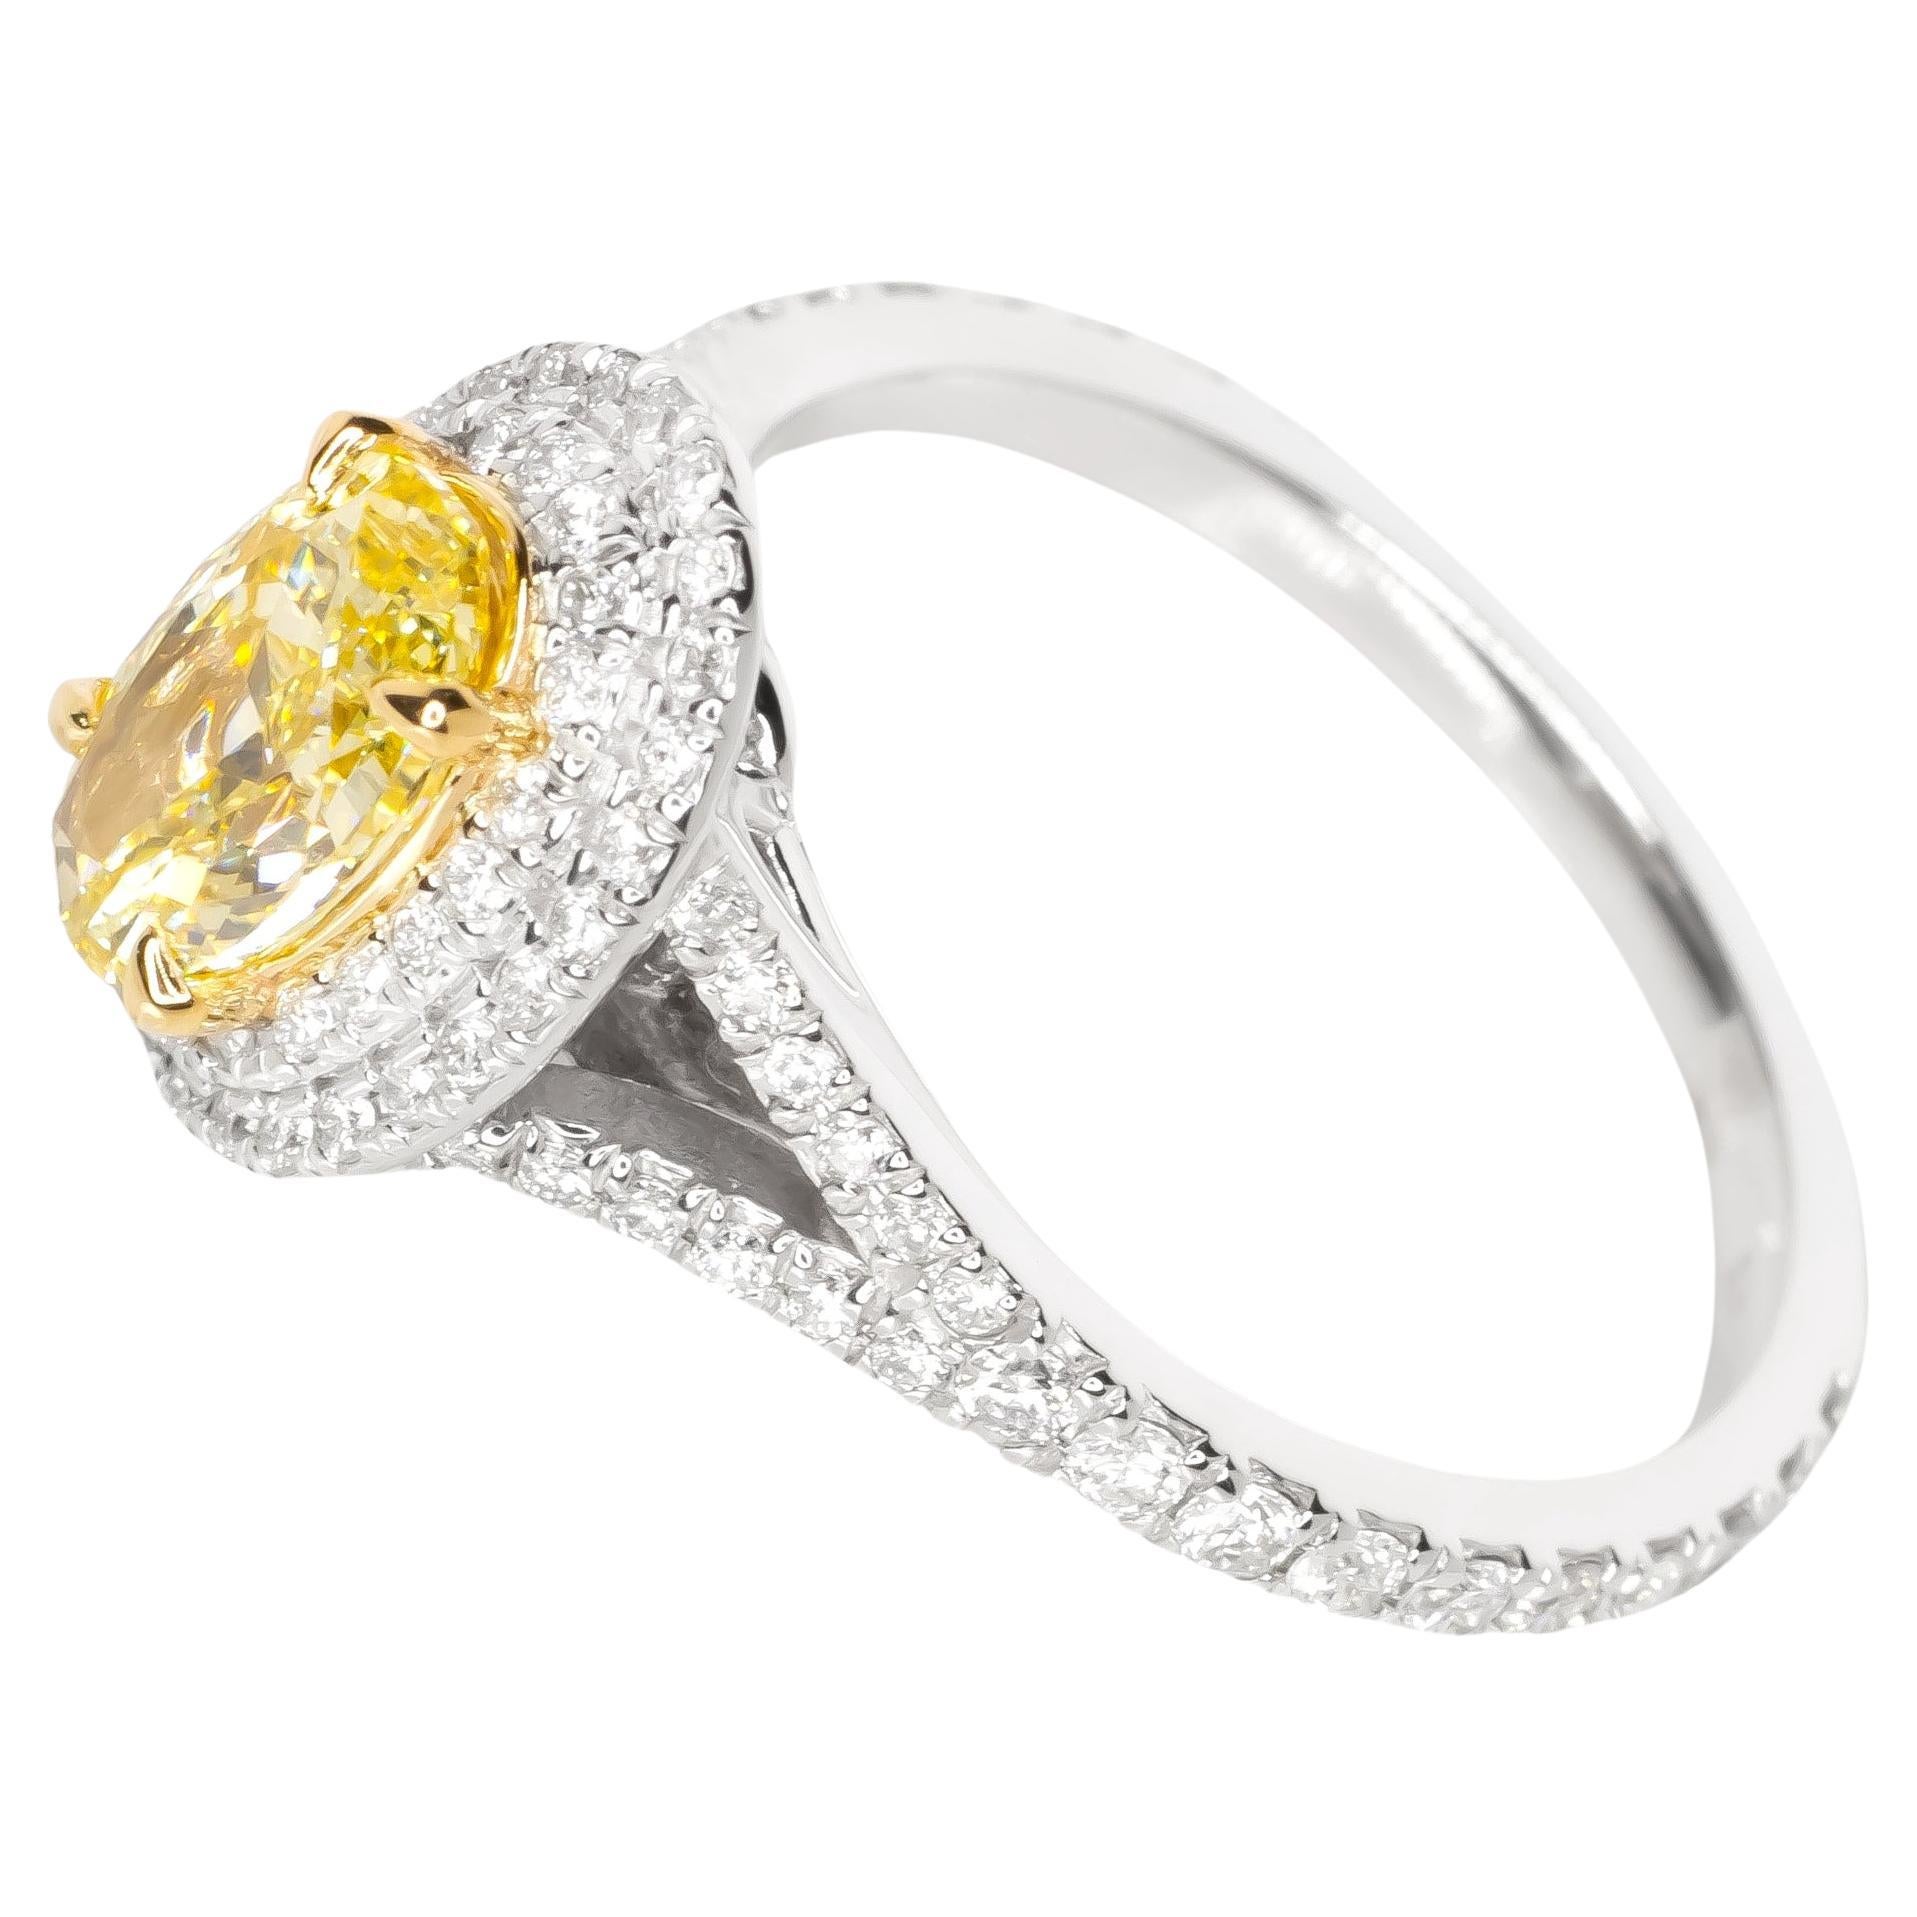 1 carat fancy yellow oval diamond set with a white round diamonds double halo in yellow gold.

Designer: Antinori di Sanpietro
Material: 14k white and yellow gold
Diamond: 1 oval shape = 1.00ct
Colour: Fancy yellow
Clarity: VVS2
GIA: 2221085514
Ring